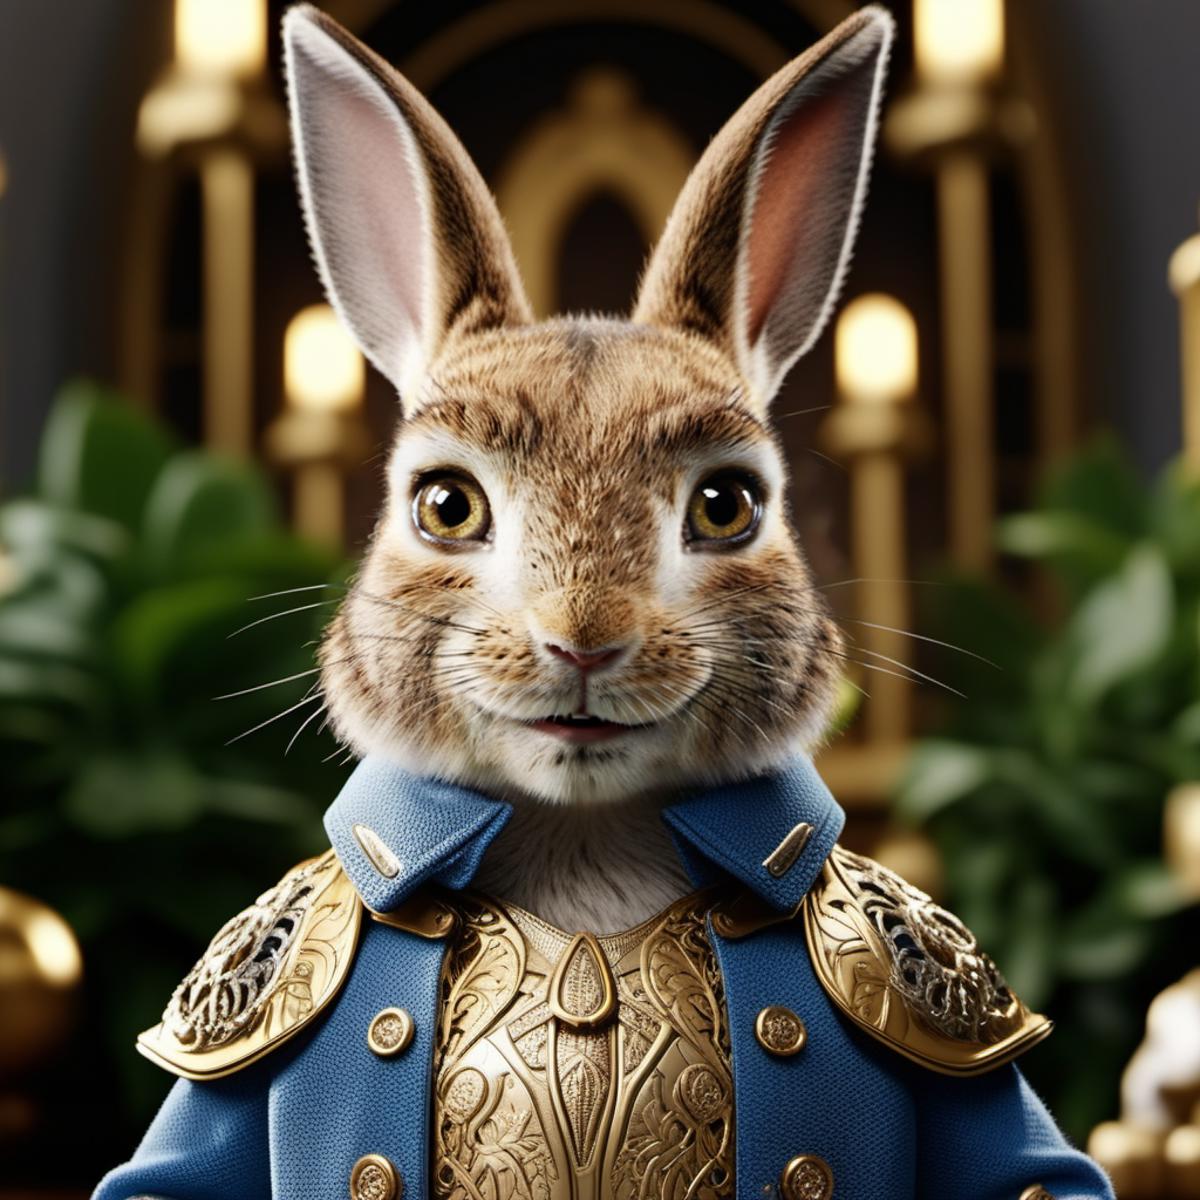 Peter Rabbit - SDXL image by PhotobAIt